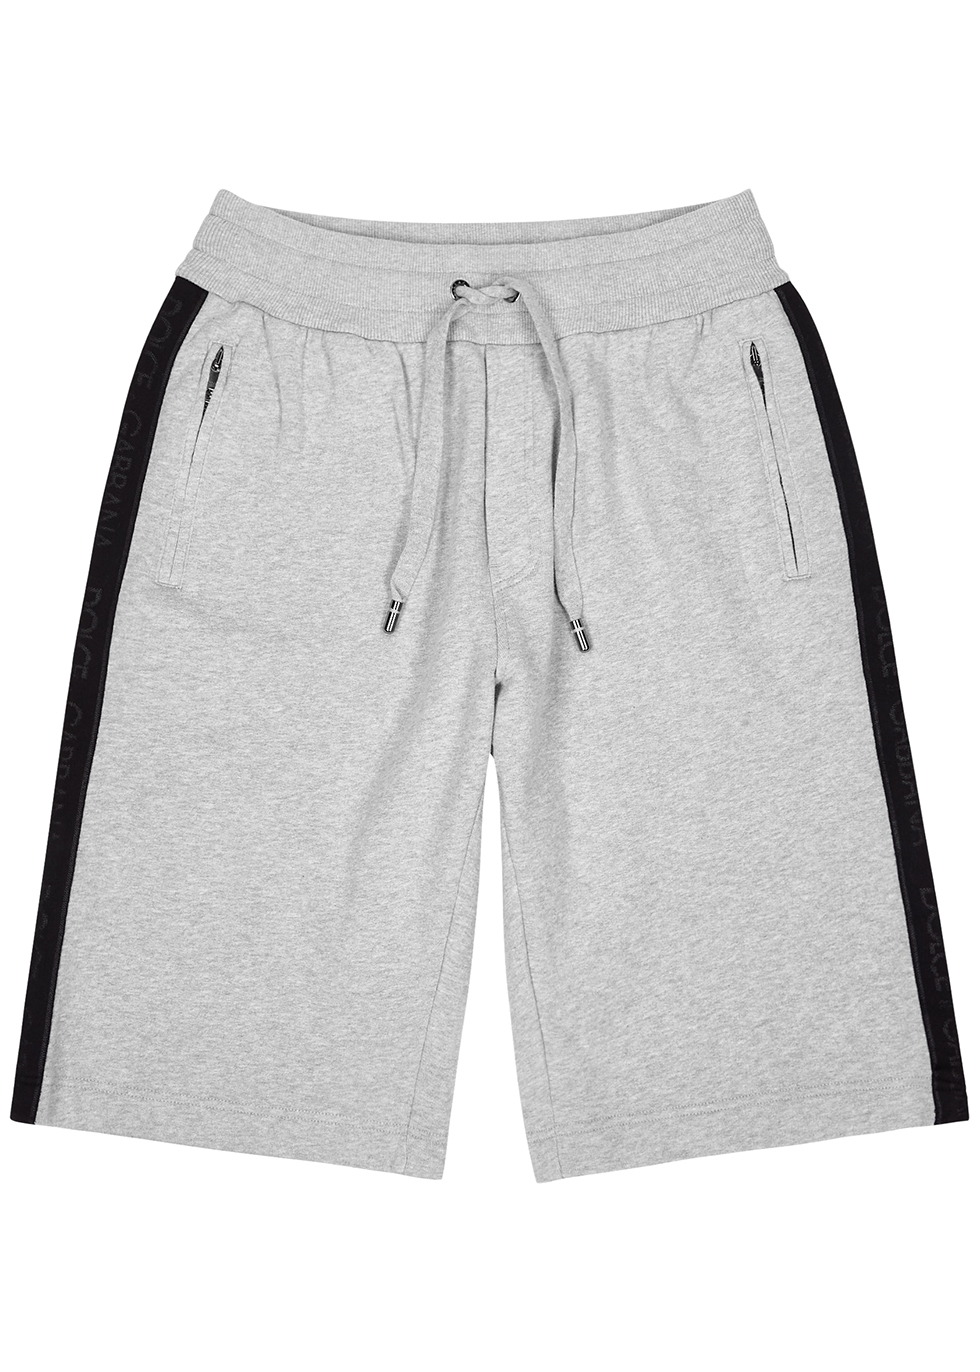 Grey striped logo cotton shorts